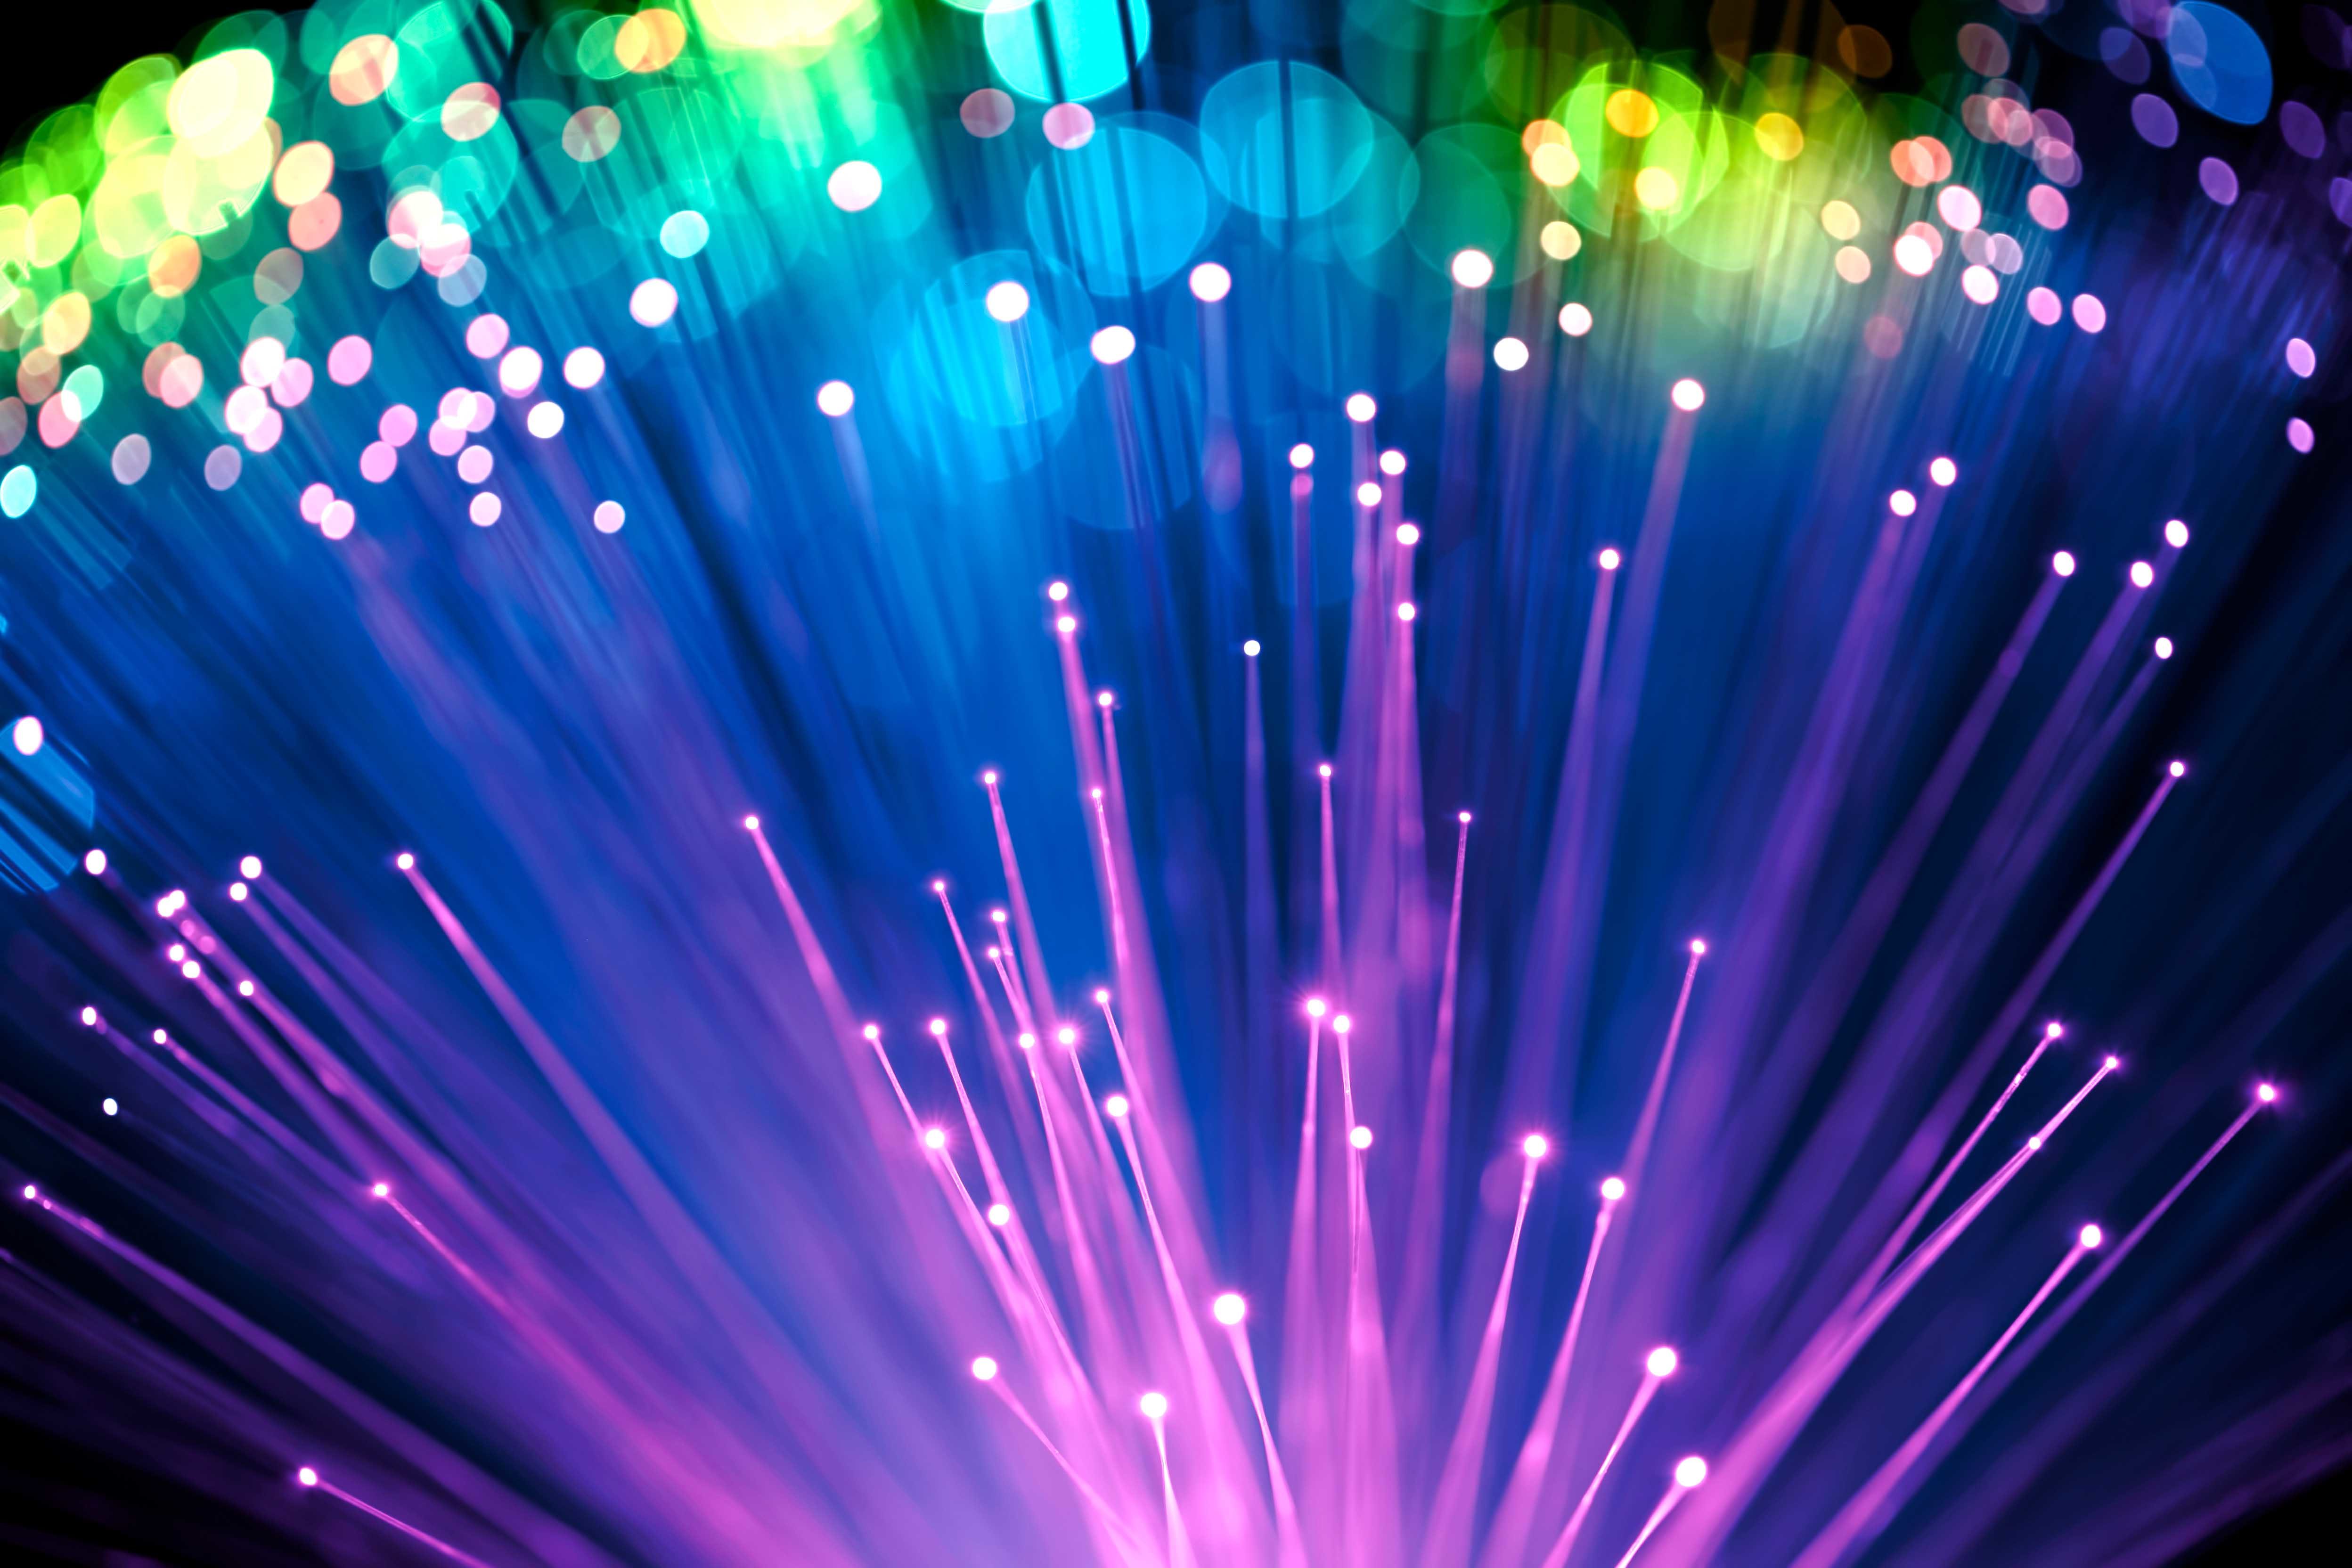 Make Way for High-Density Fiber Optic Cables